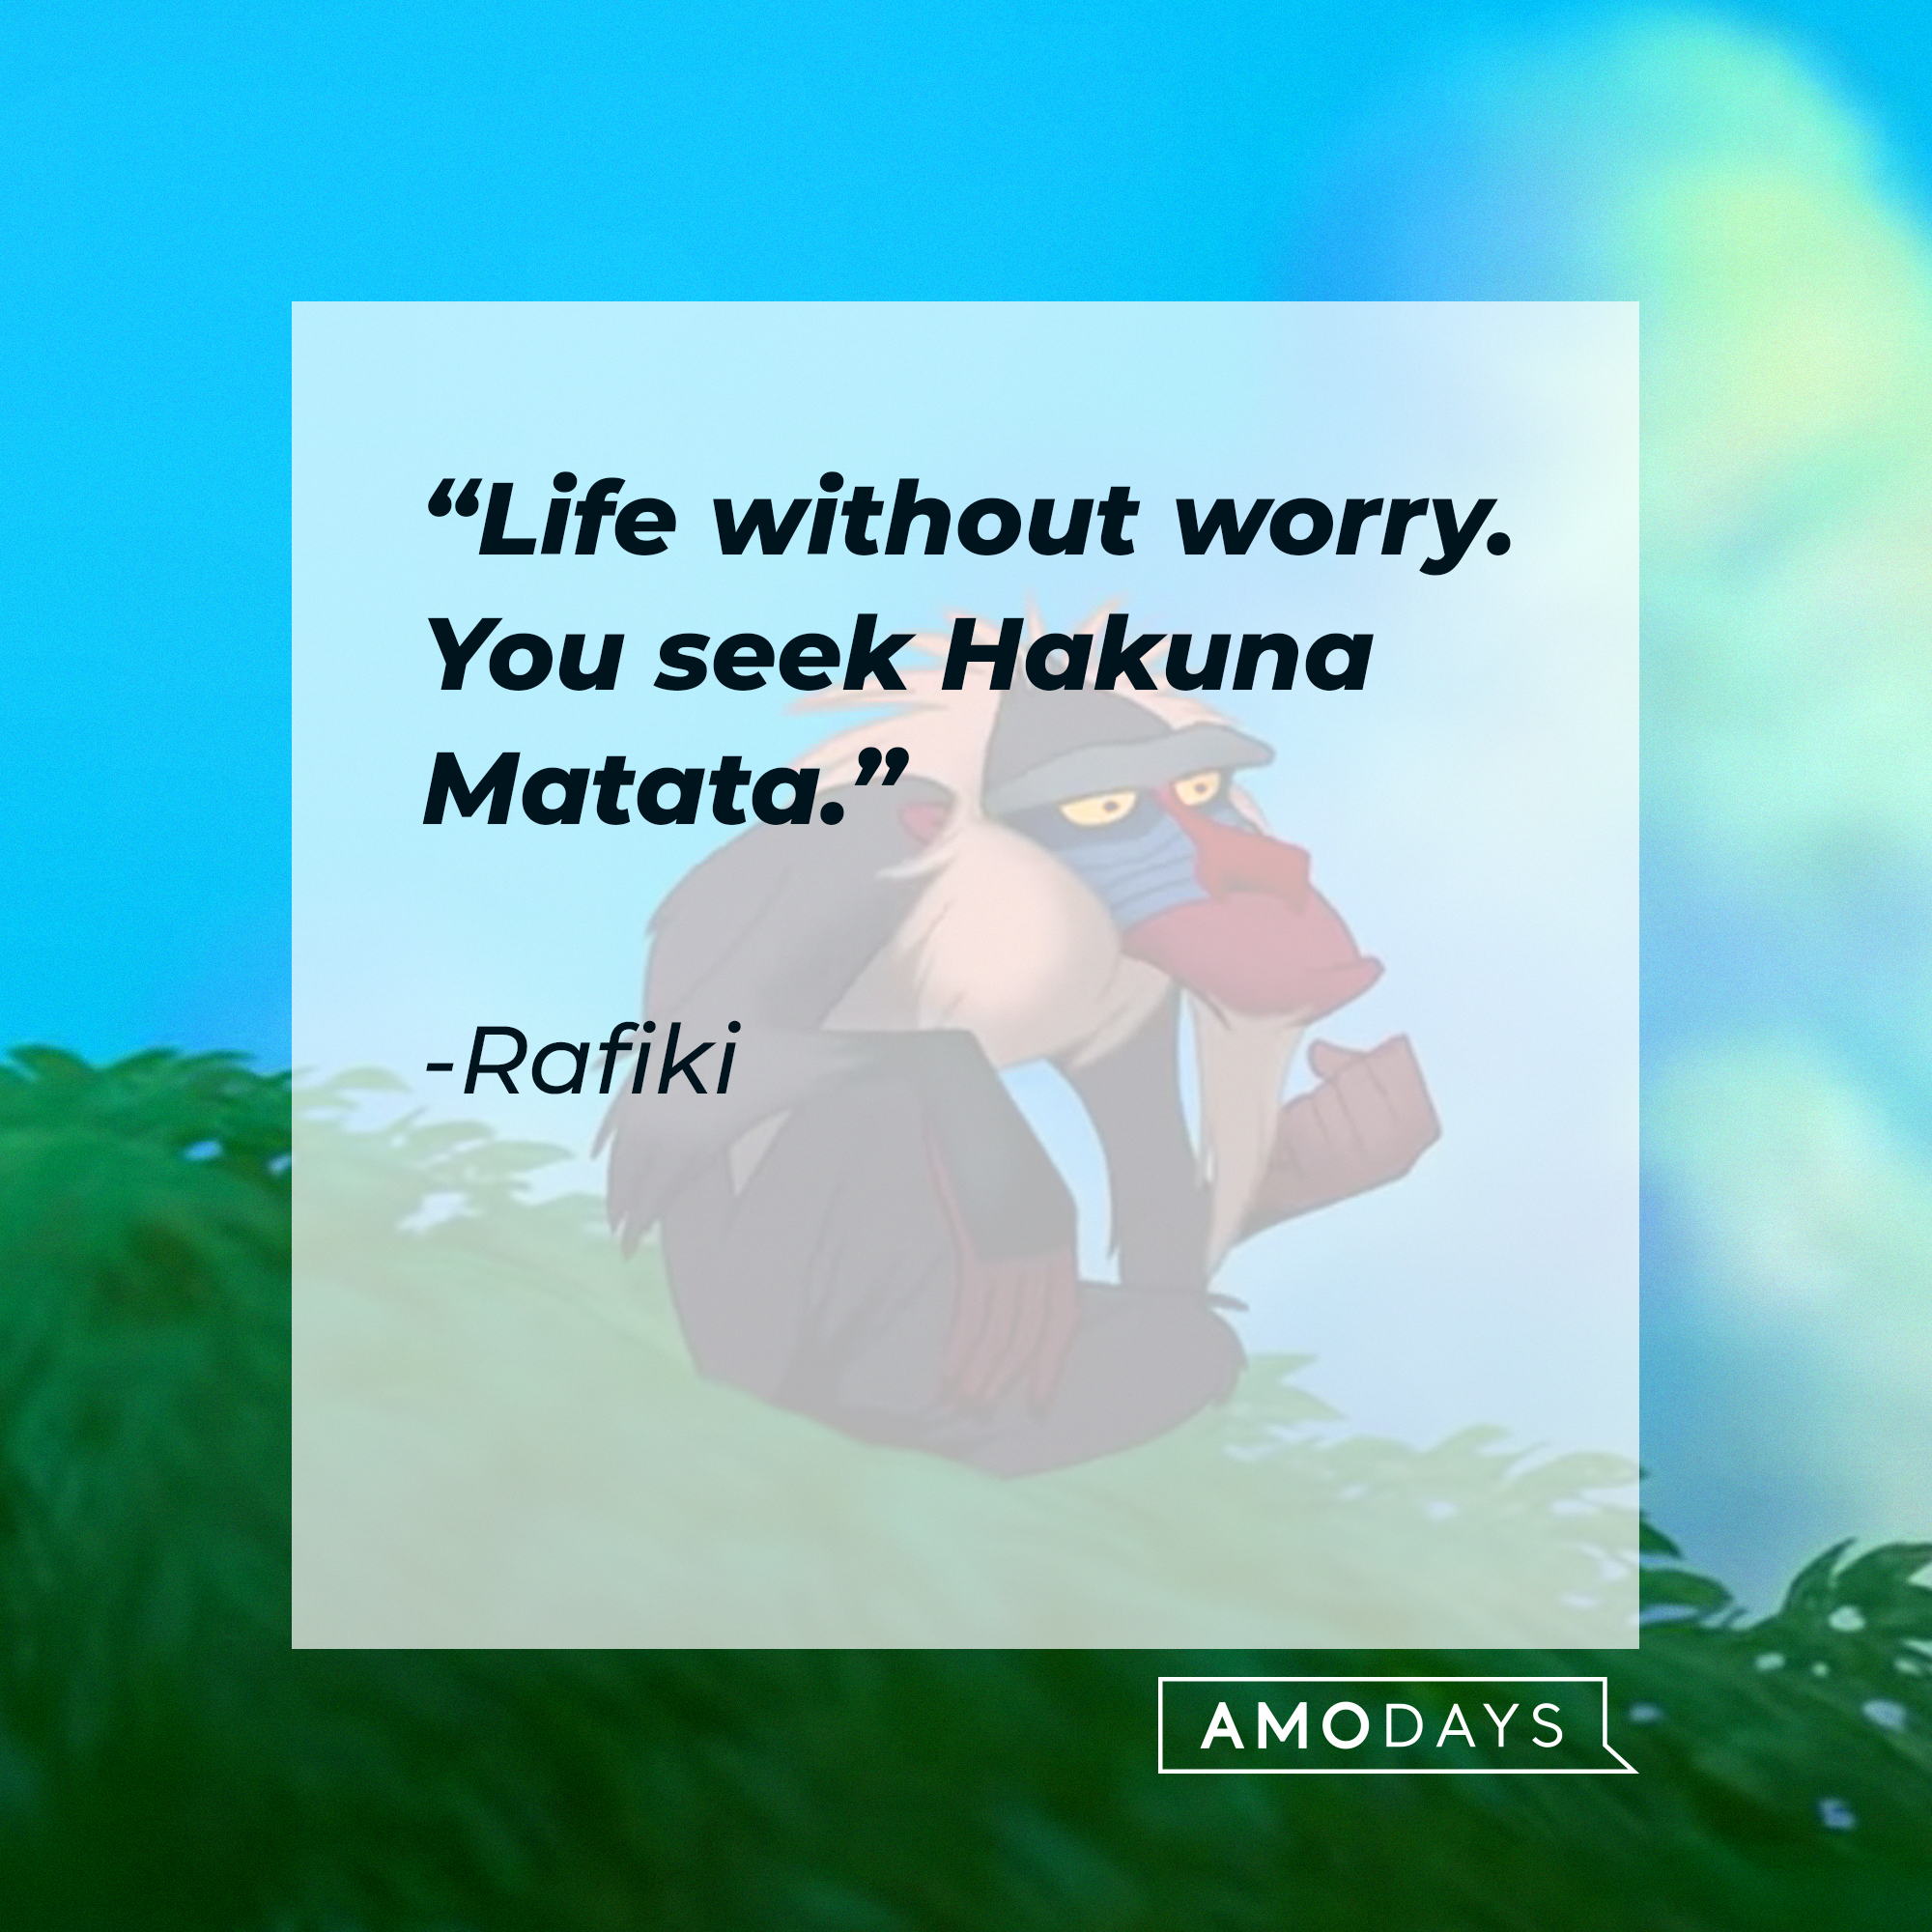 Raffiki's quote: "Life without worry. You seek Hakuna Matata.” | Source: Facebook/DisneyTheLionKing